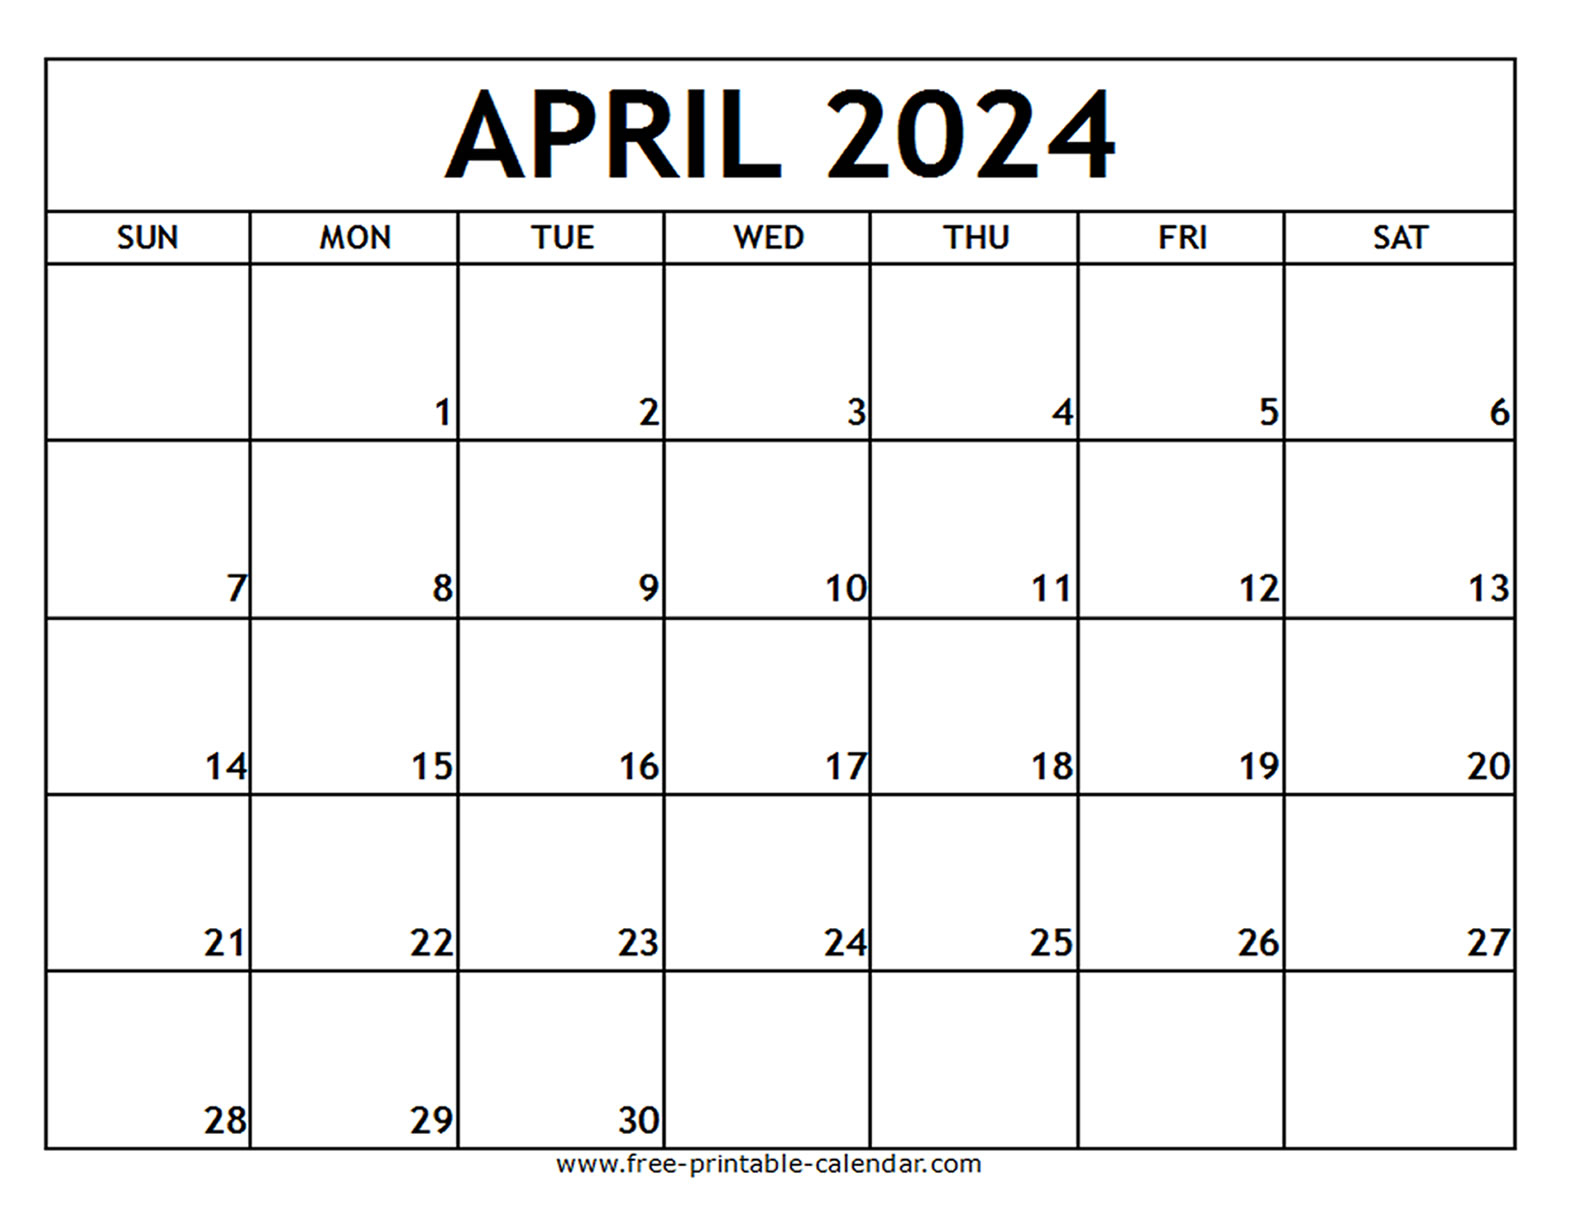 April 2024 Printable Calendar - Free-Printable-Calendar intended for Free April Calendar 2024